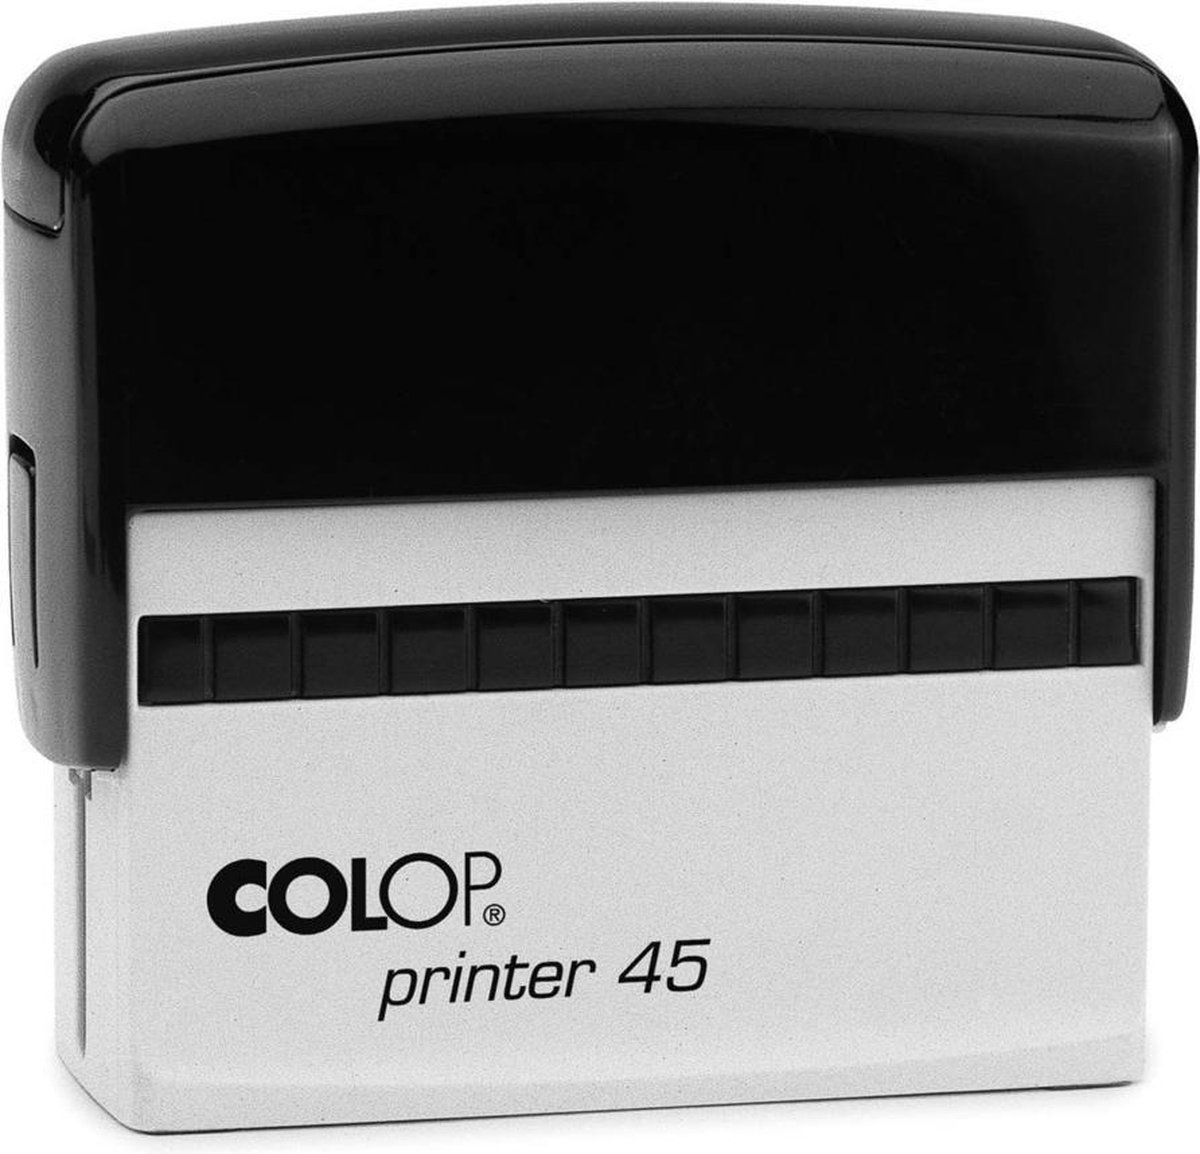 Colop Printer 45 Rood - Stempels - Stempels volwassenen - Gratis verzending